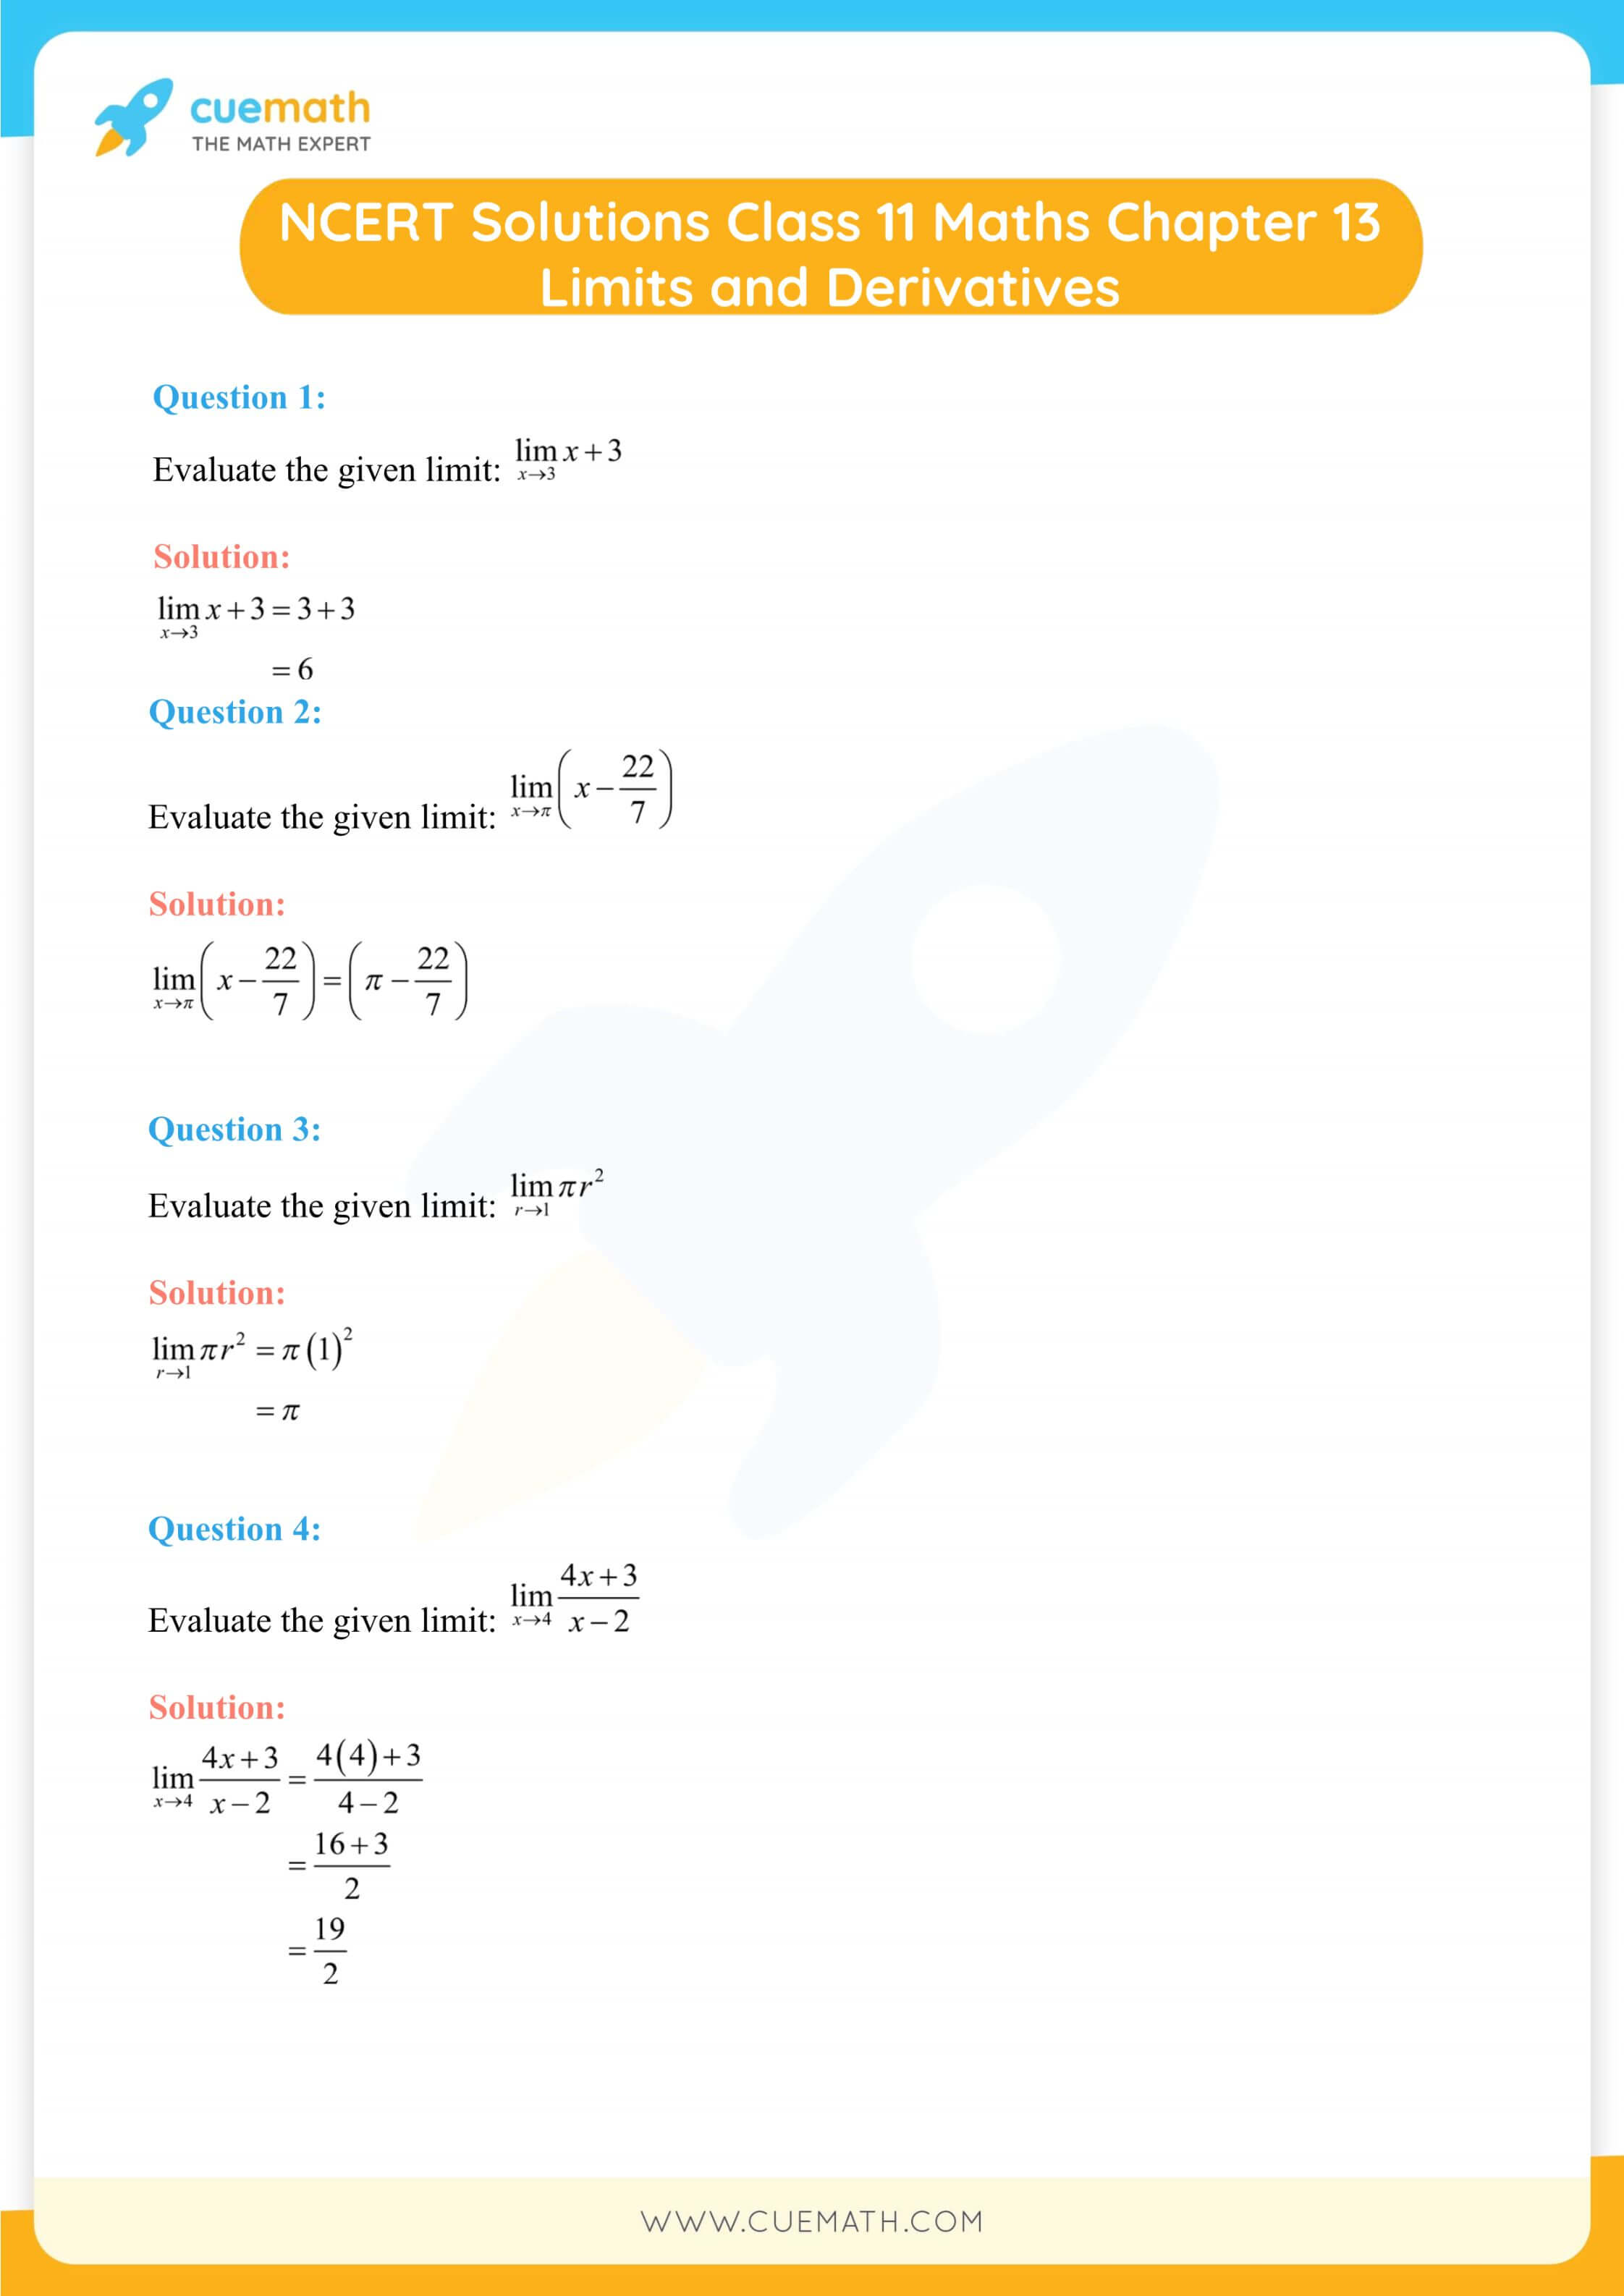 NCERT Solutions Class 11 Maths Chapter 13 Exercise 13.1 1